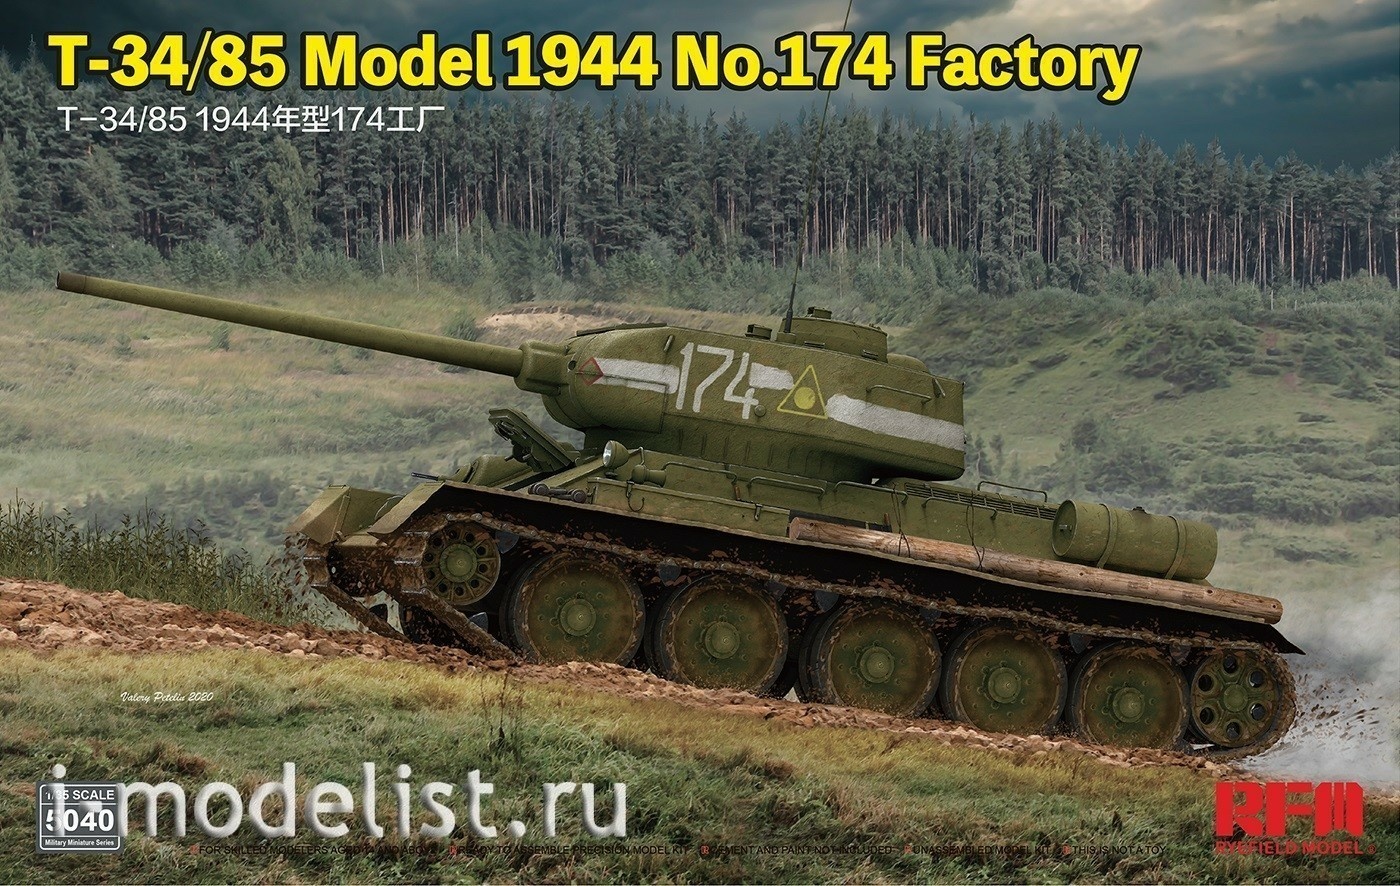 RM-5040 Rye Field Model 1/35 Советский танк Т-34-85 1944 года, завод № 174 Омск